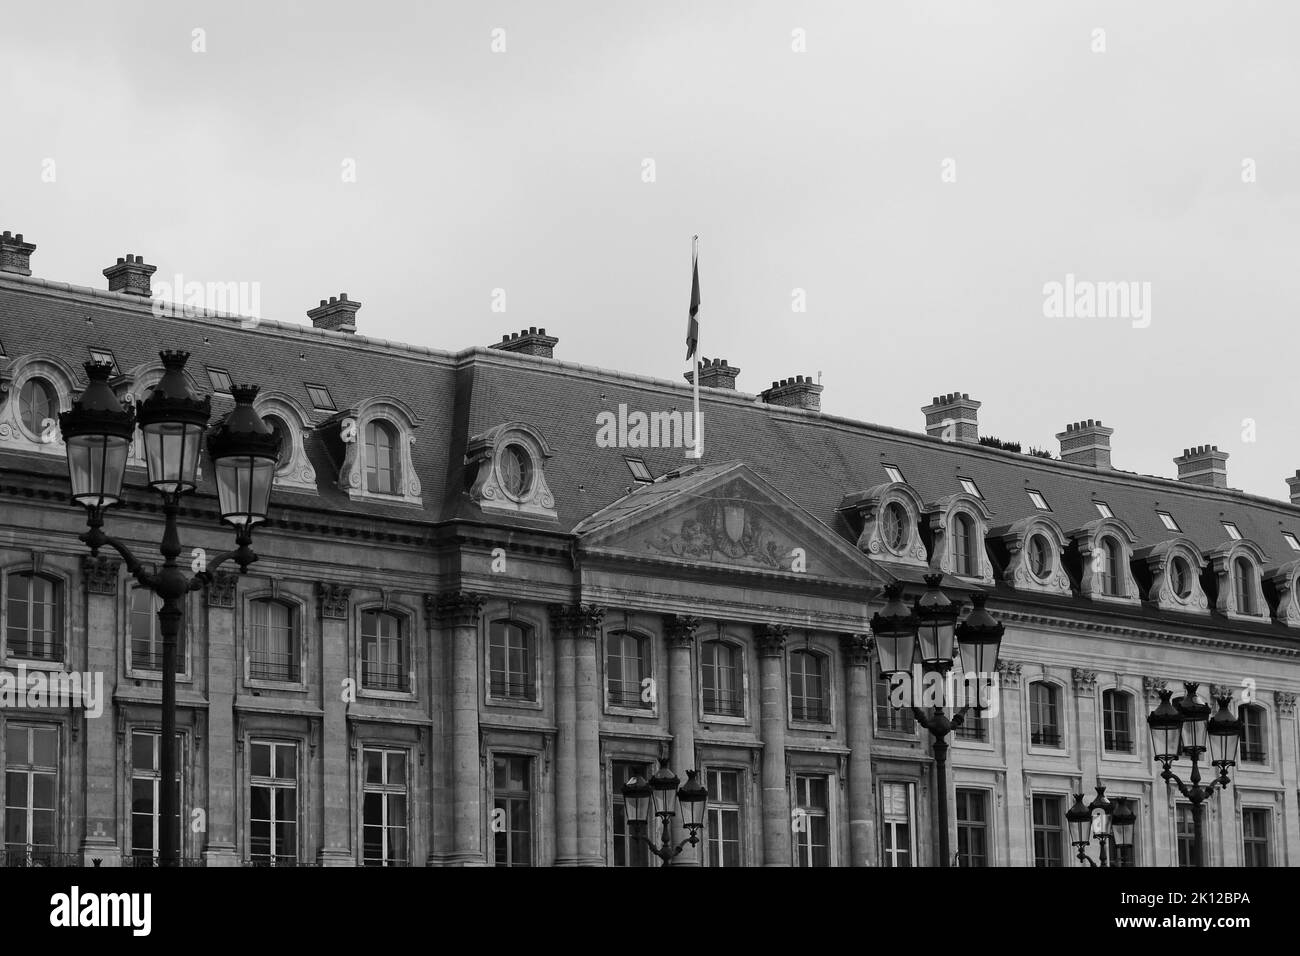 Place Vendome. Vendome Square Architecture. Landmarks in Paris, France. Stock Photo